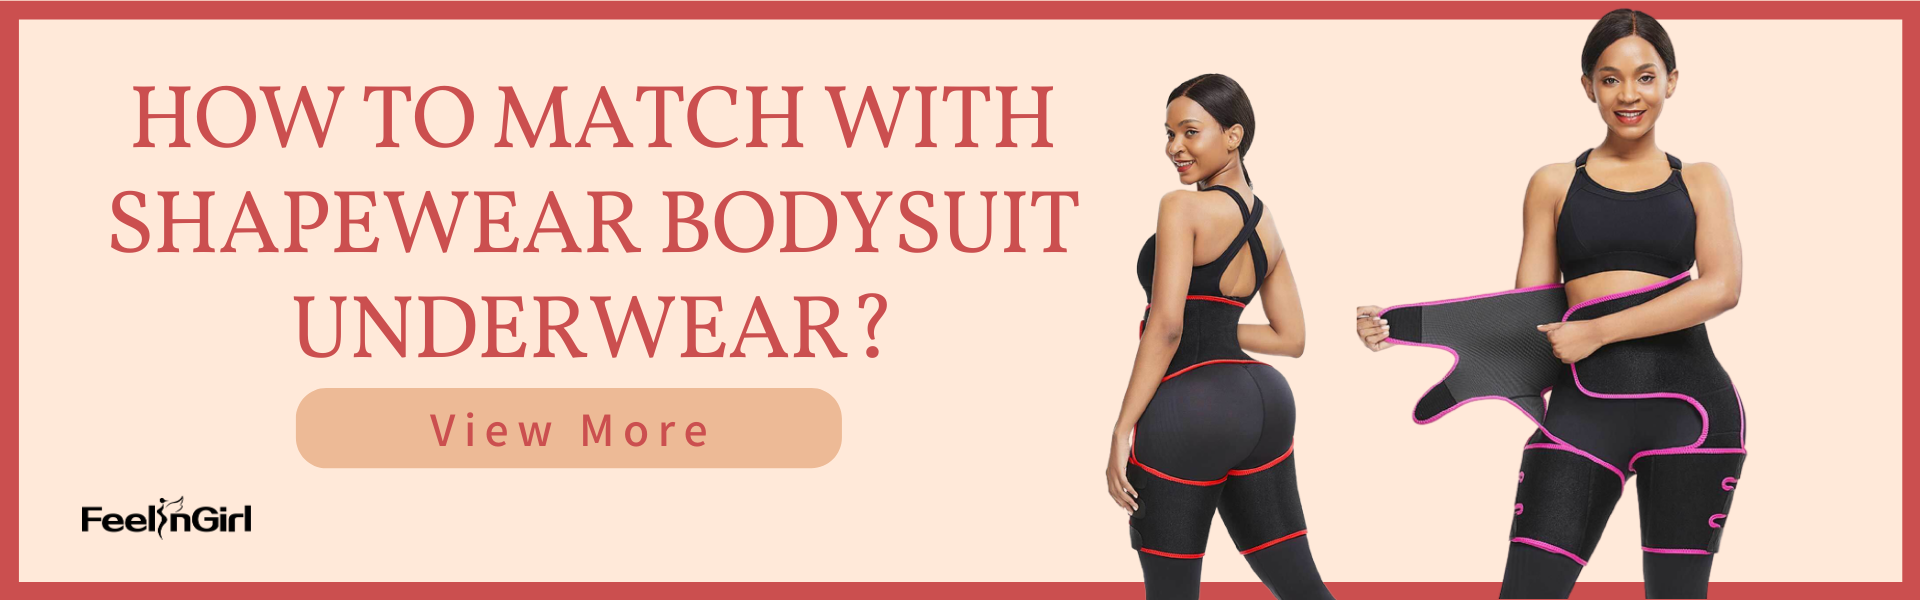 How to match with shapewear bodysuit underwear?